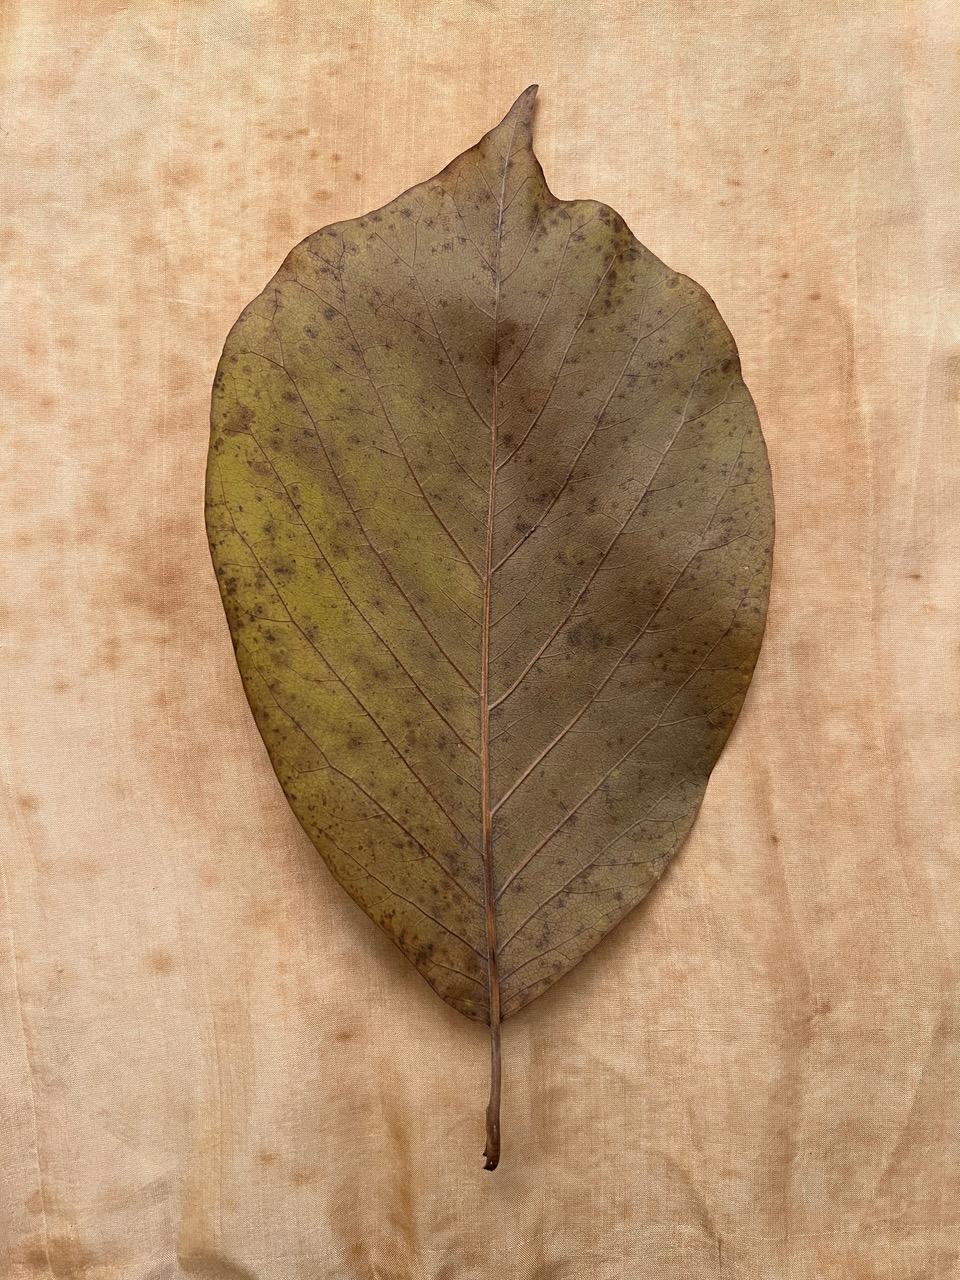 Paul Cava Still-Life Photograph - Untitled #1940 from "Leaves" series: nature still-life leaf photograph w/ green